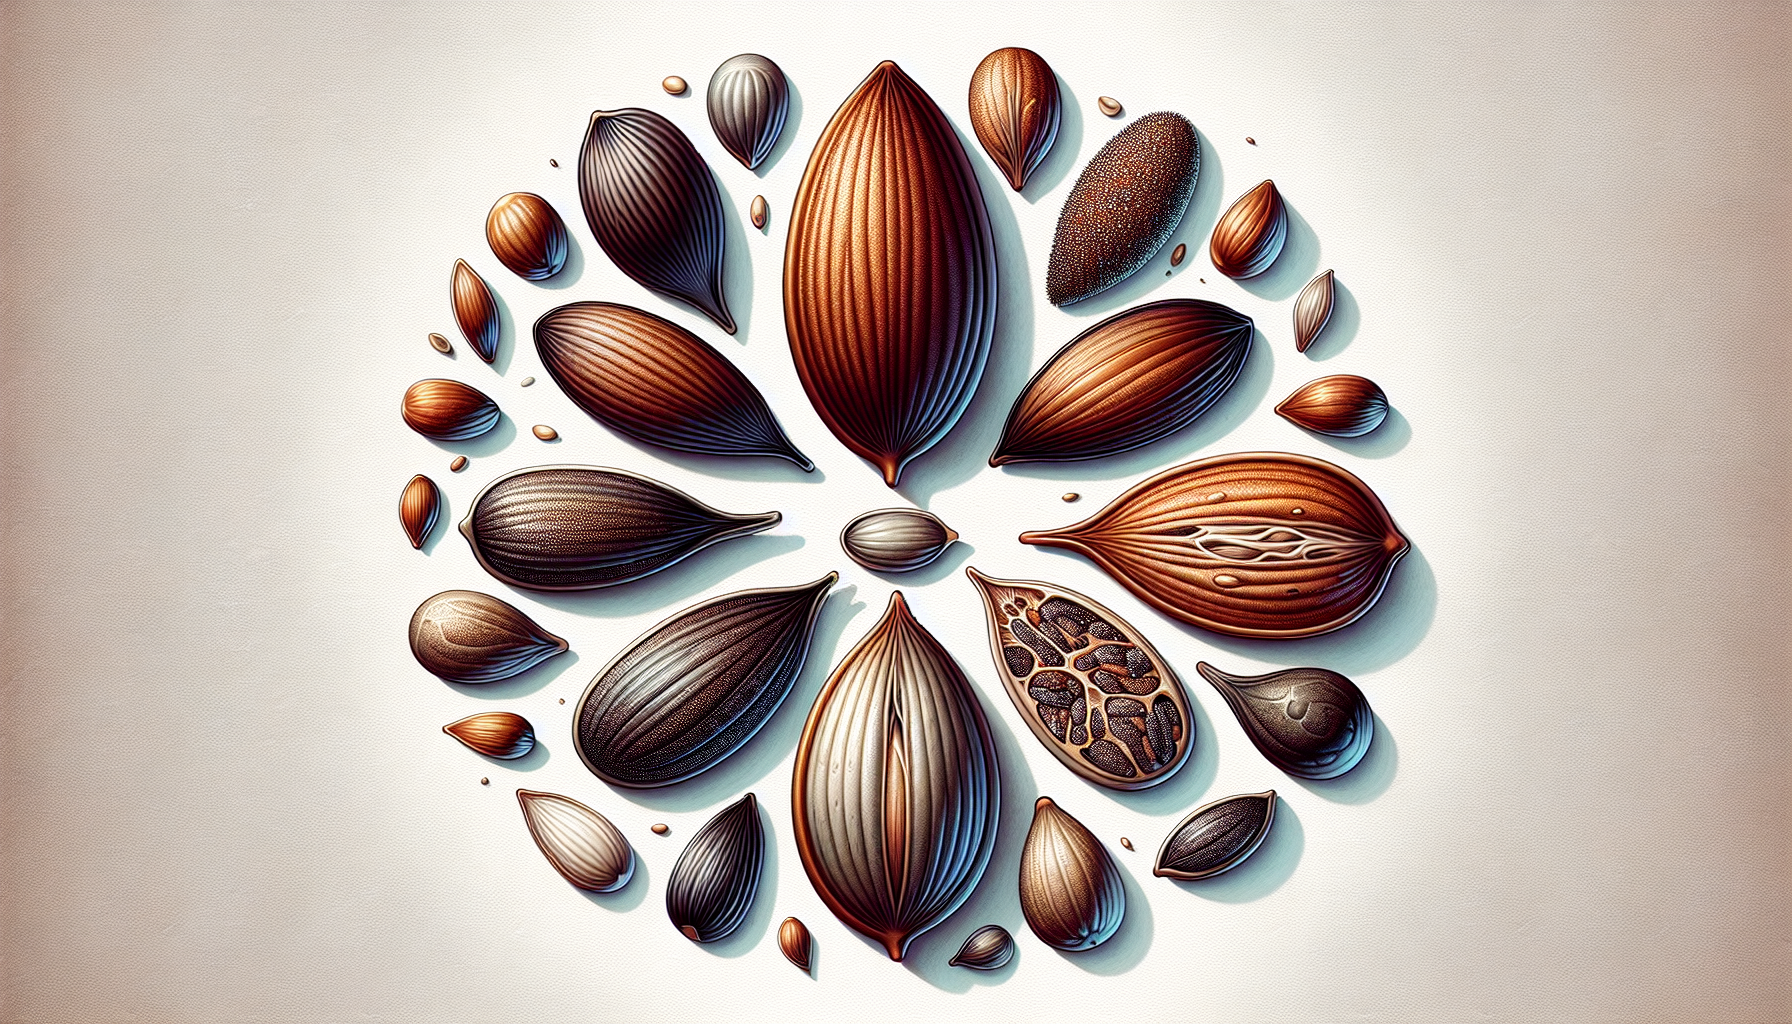 Illustration of cannabis seeds